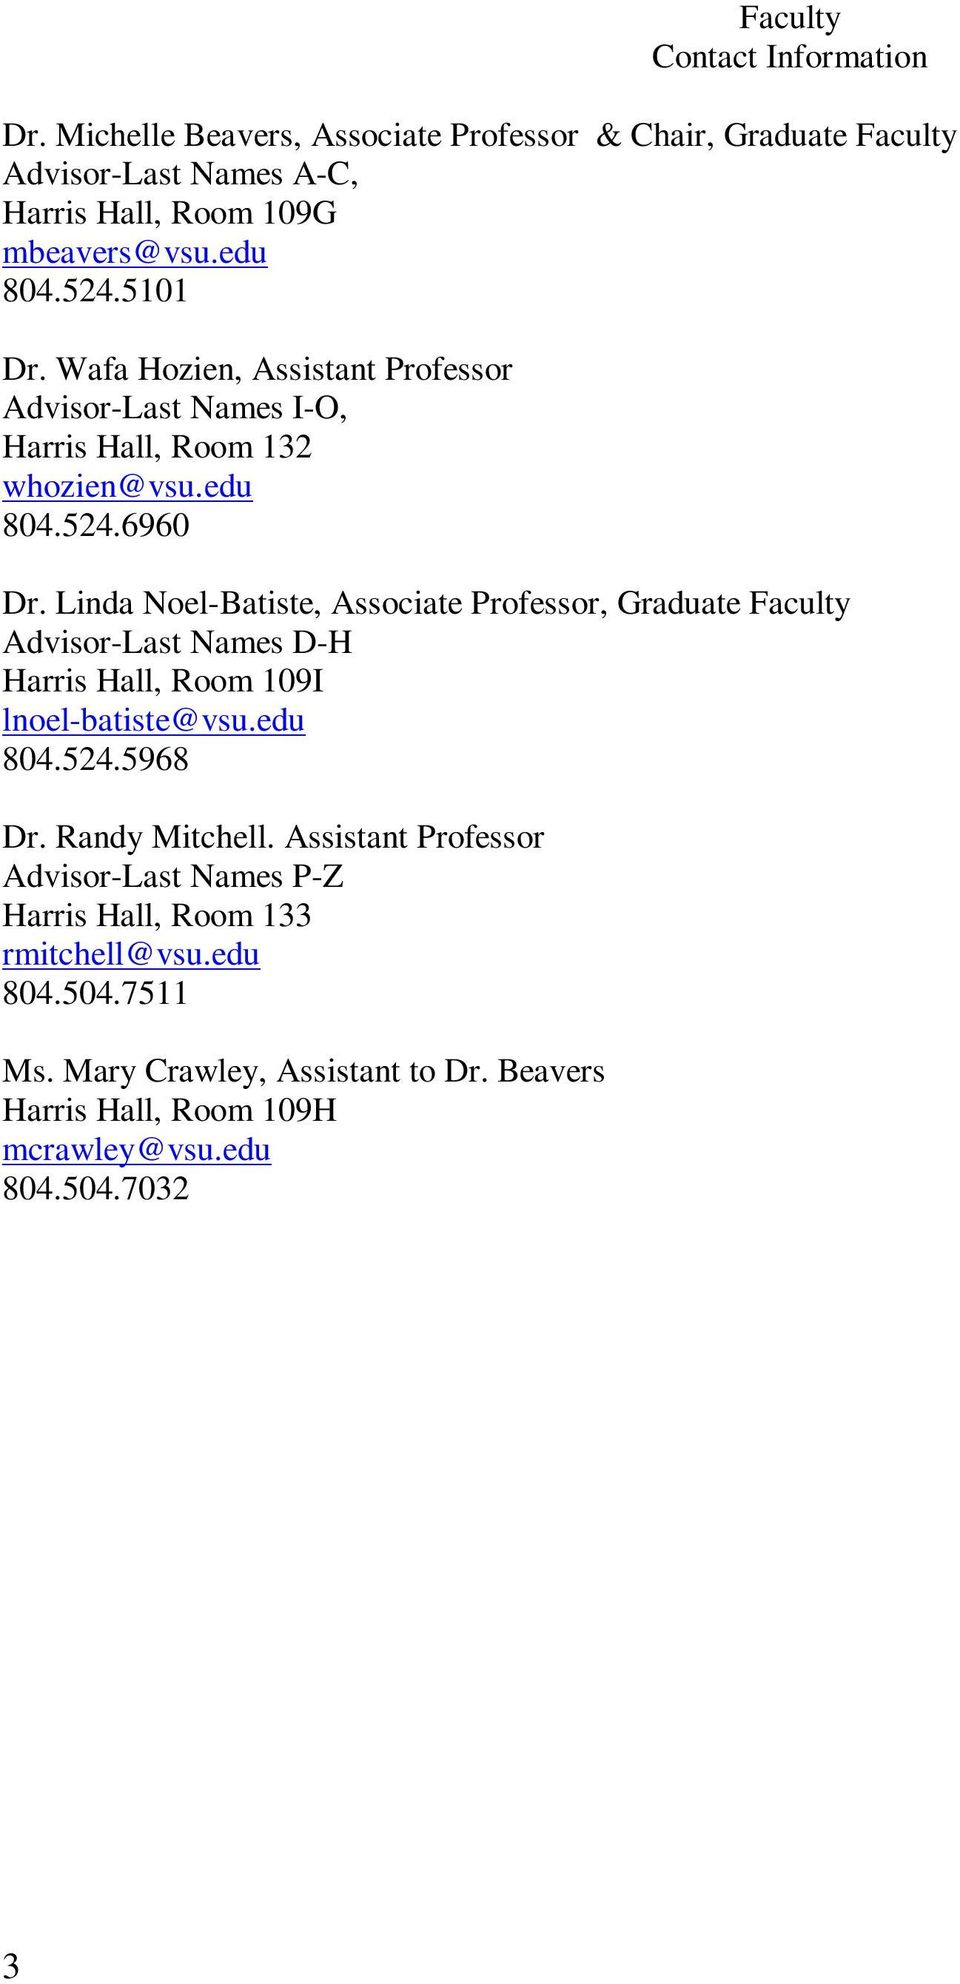 Linda Noel-Batiste, Associate Professor, Graduate Faculty Advisor-Last Names D-H Harris Hall, Room 109I lnoel-batiste@vsu.edu 804.524.5968 Dr. Randy Mitchell.